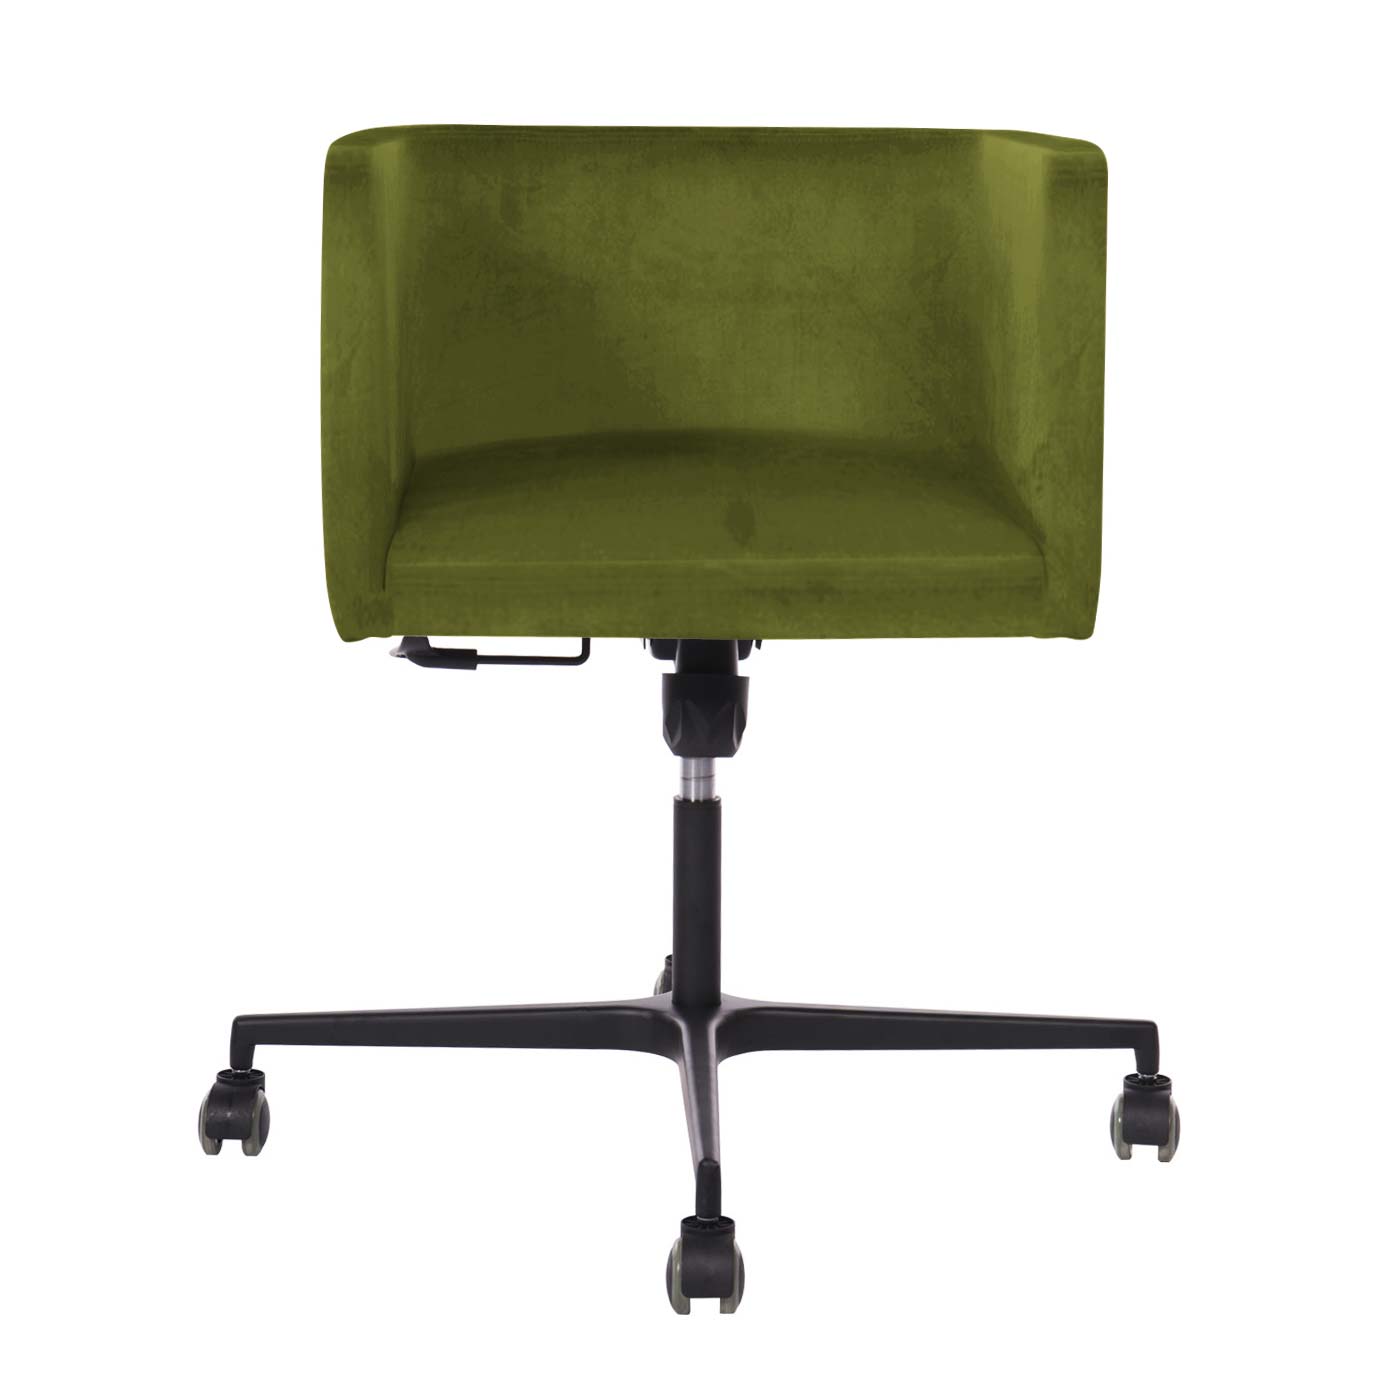 Dalian Olive Office Chair